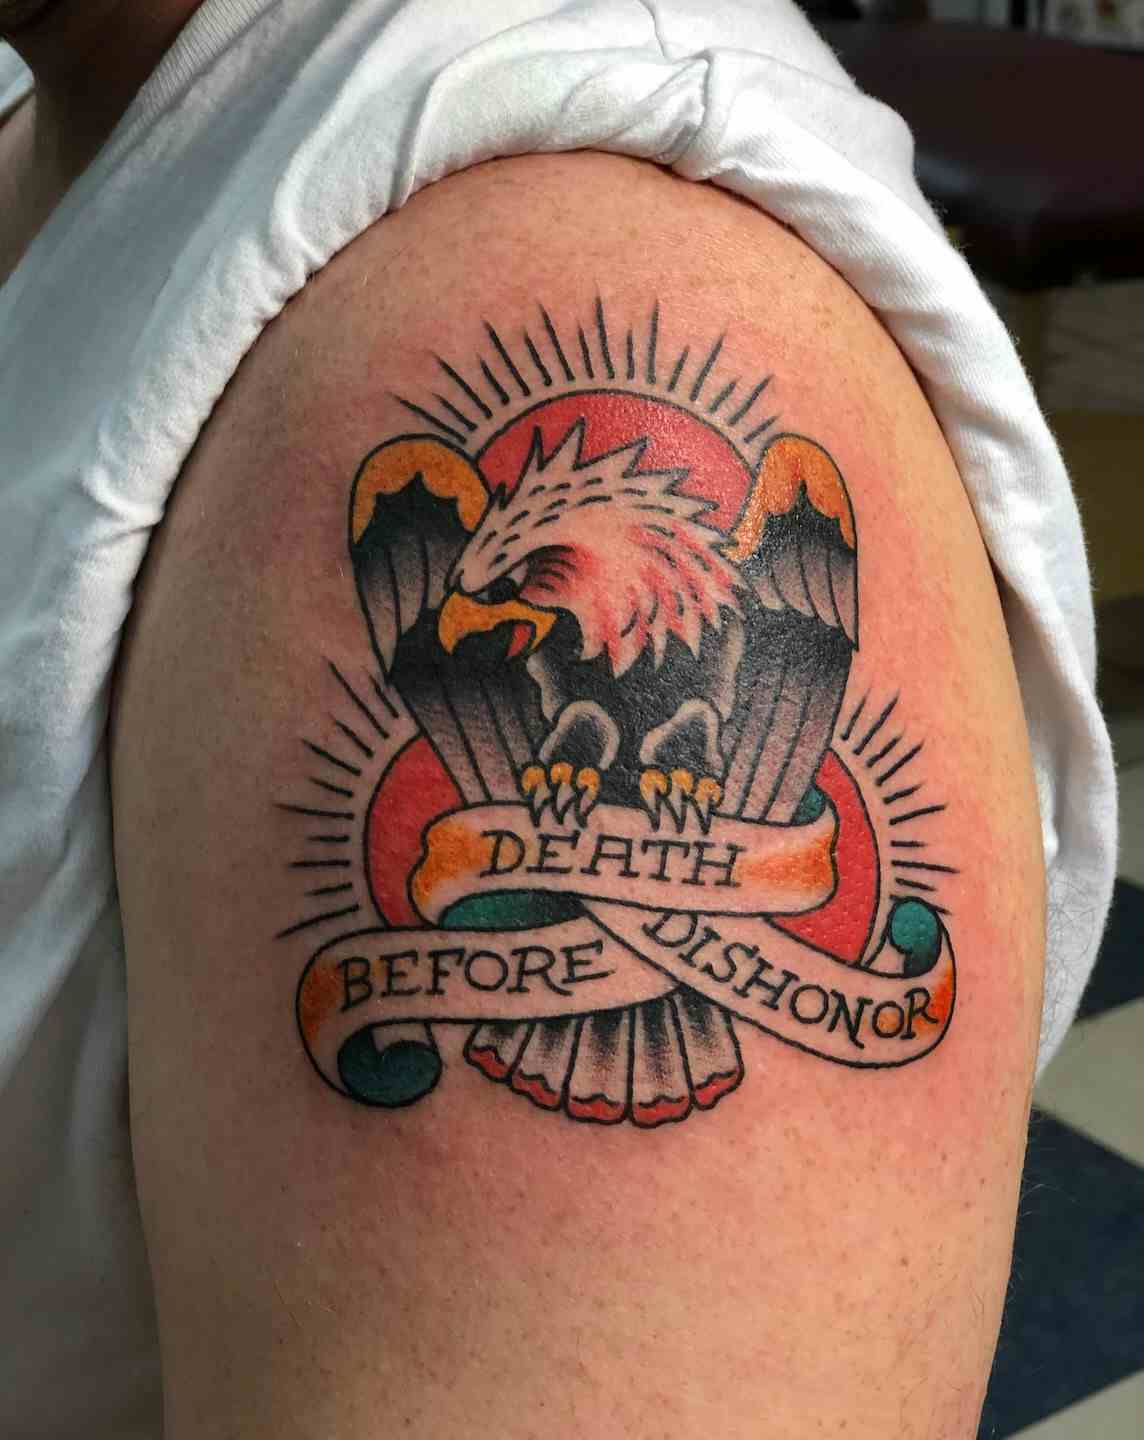 Eagle and death before dishonor tattoo